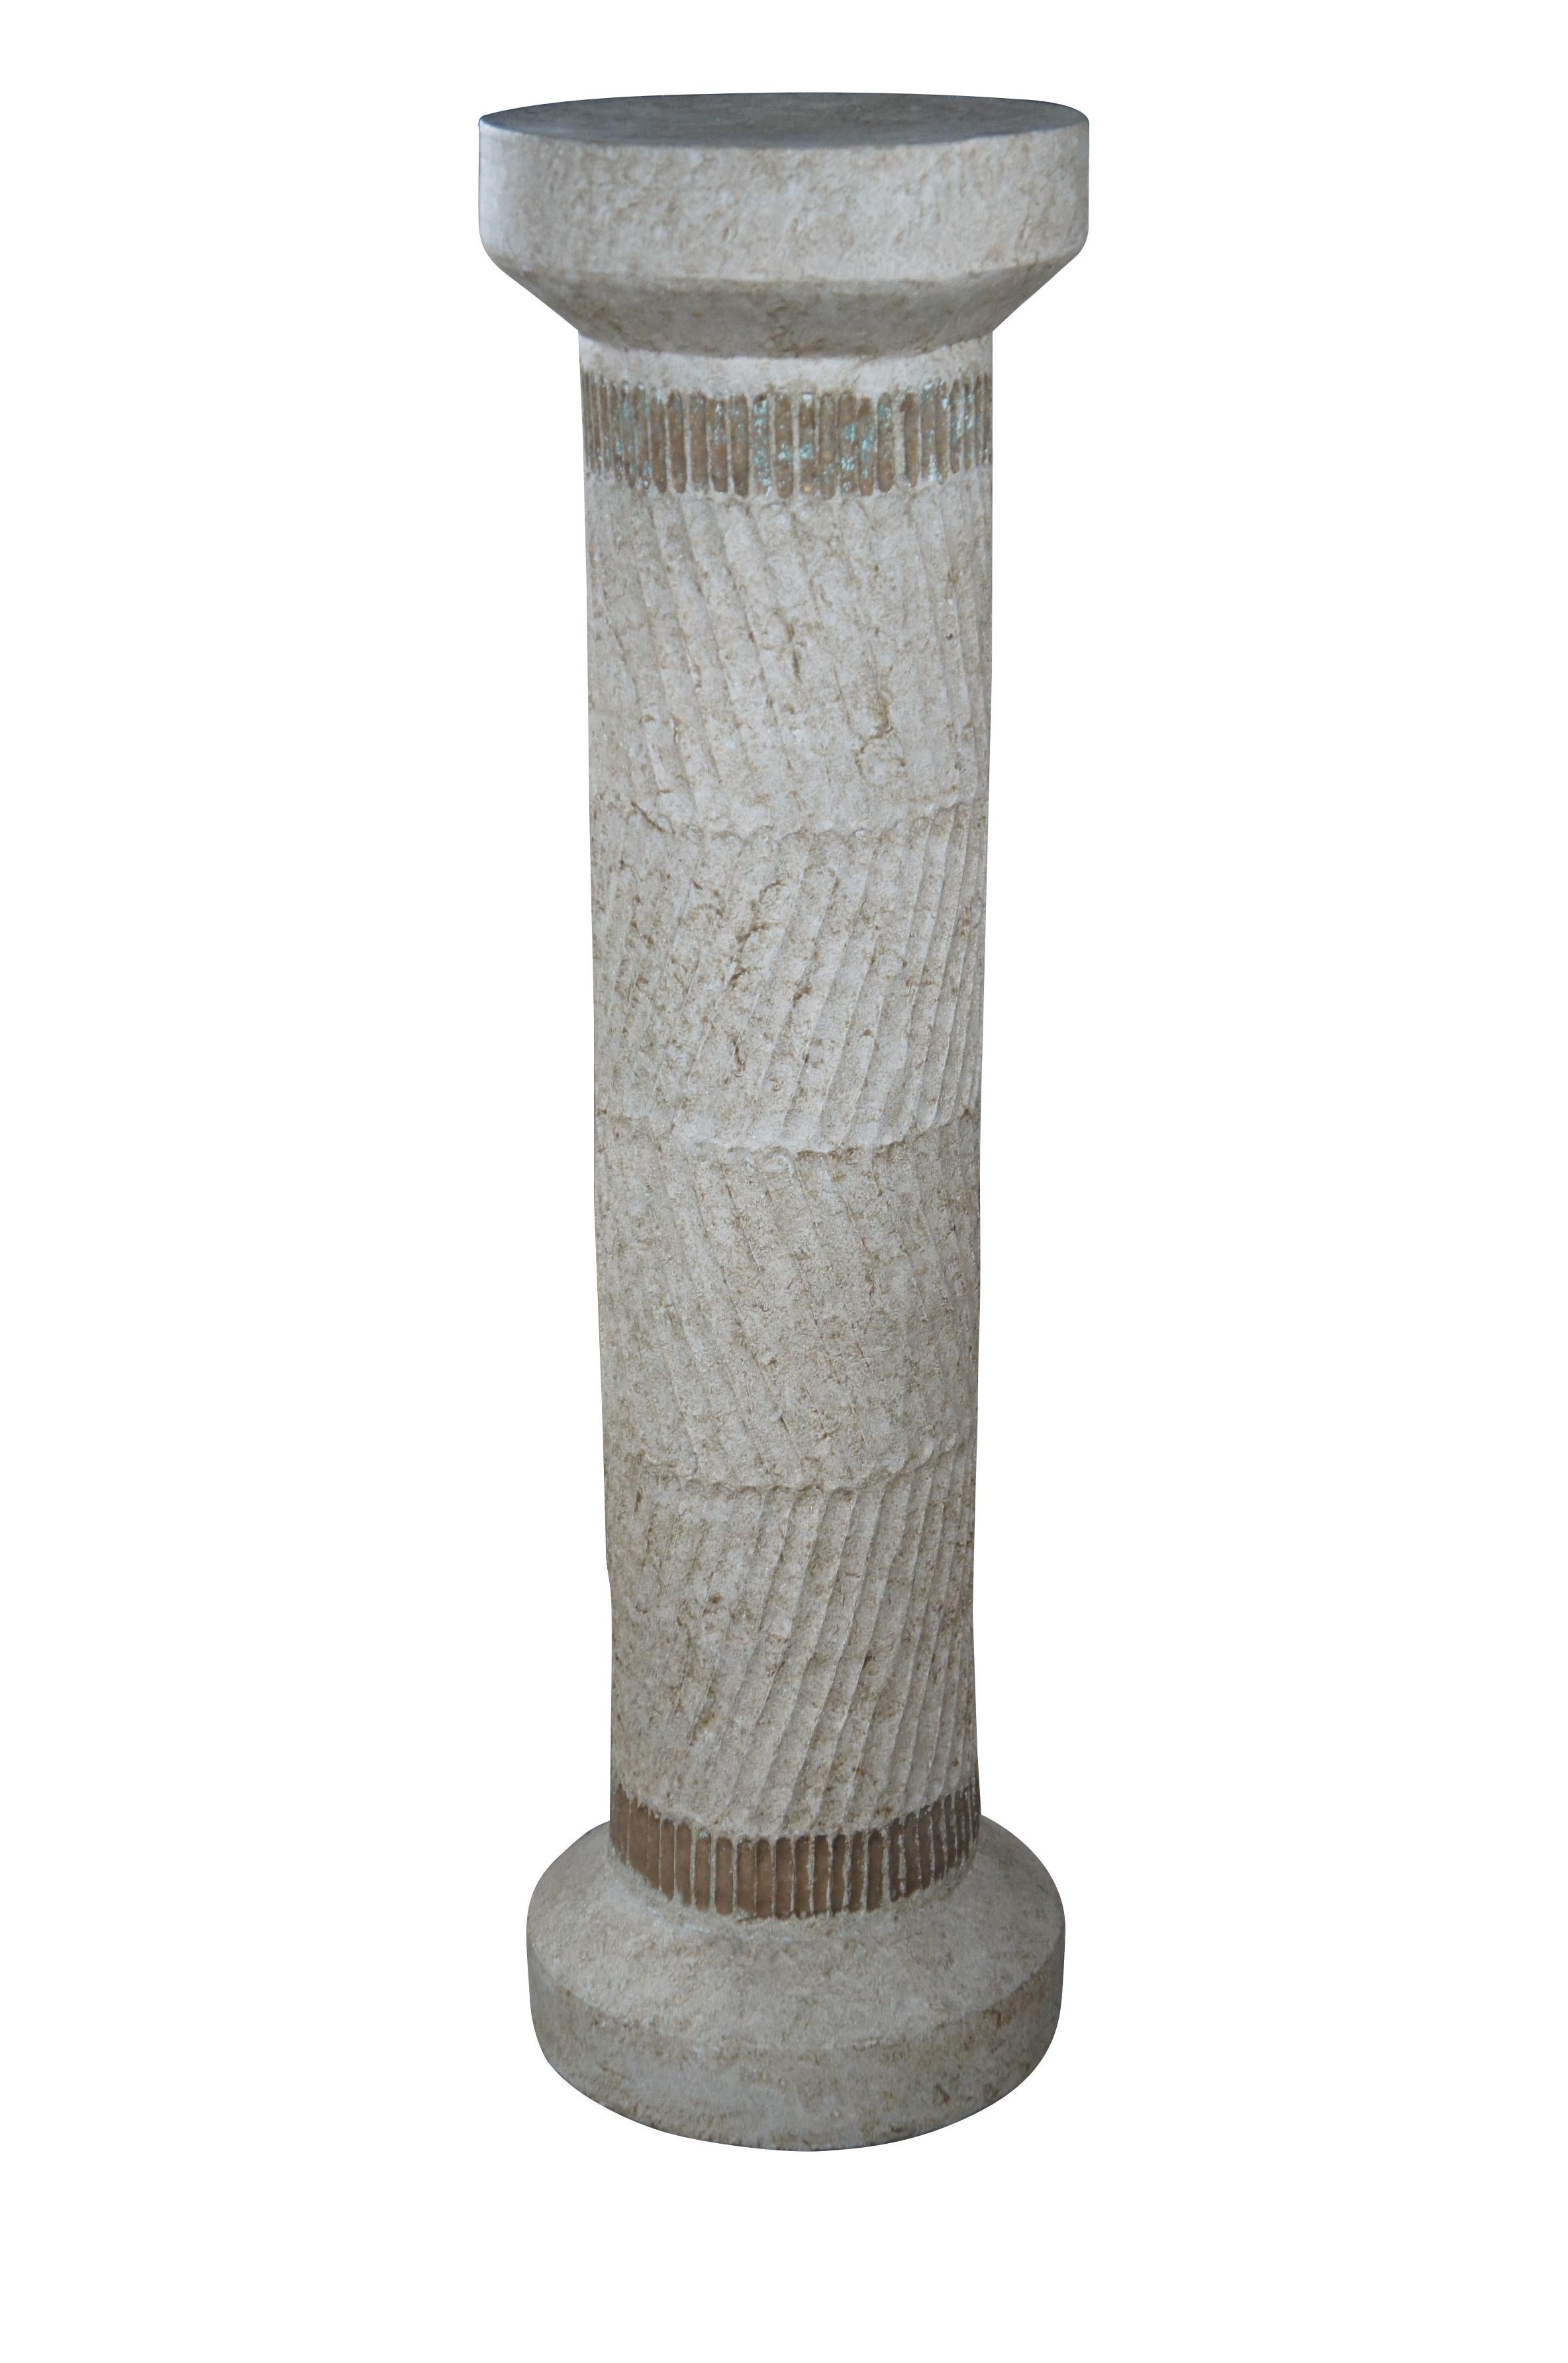 Néoclassique Neoclassical Plaster Column Sculpture Pedestal Plant Fern Display Stand 50